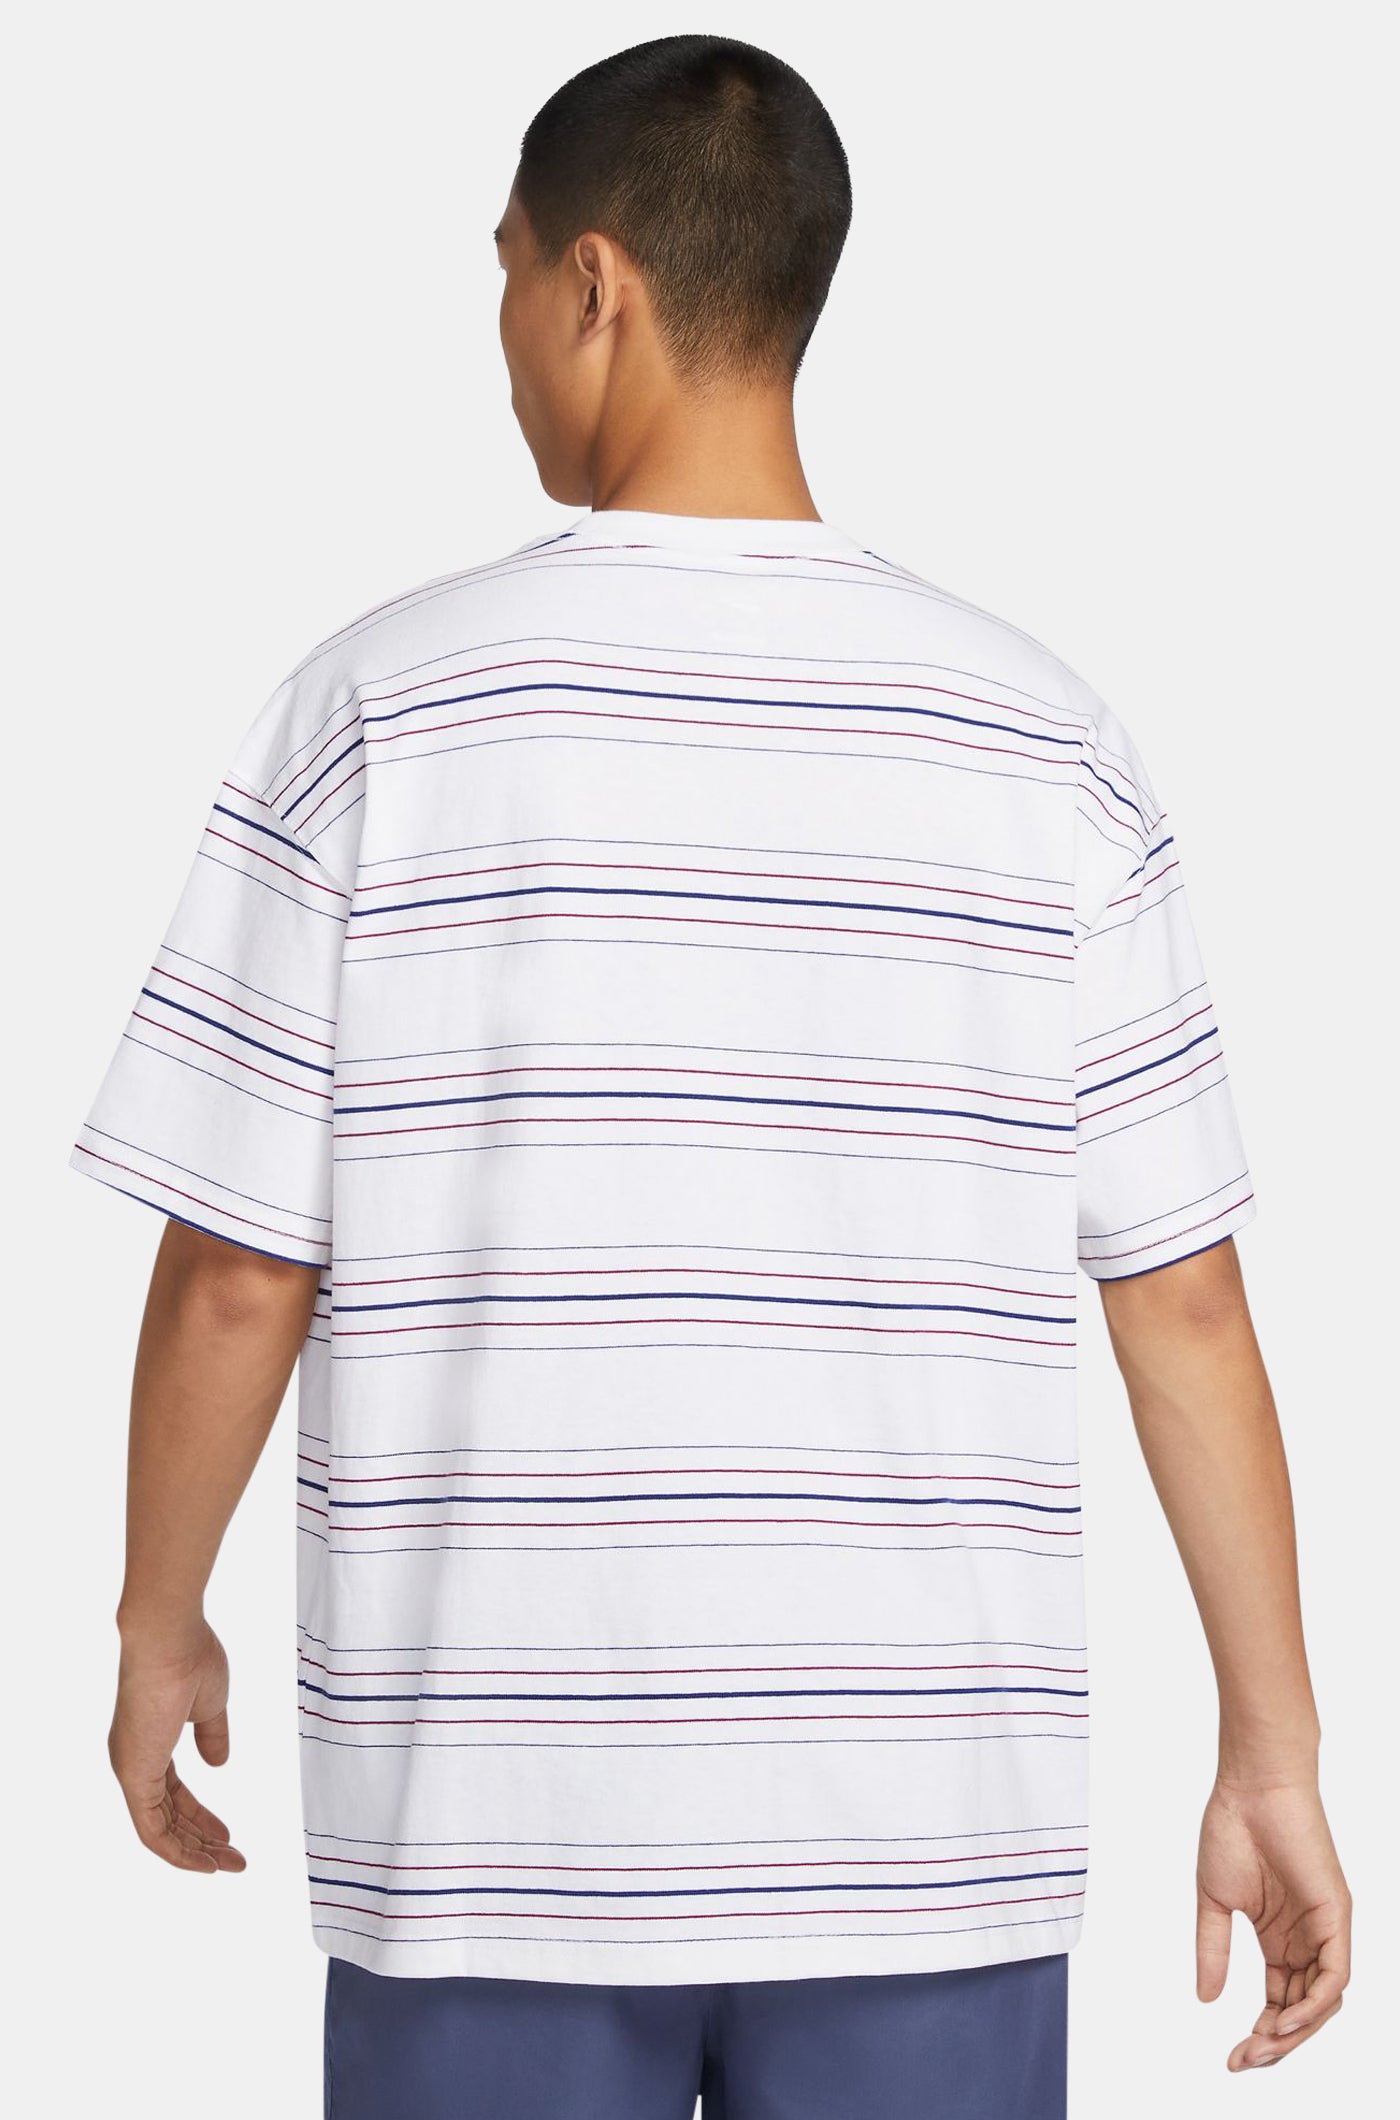 T-Shirt white striped Barça Nike